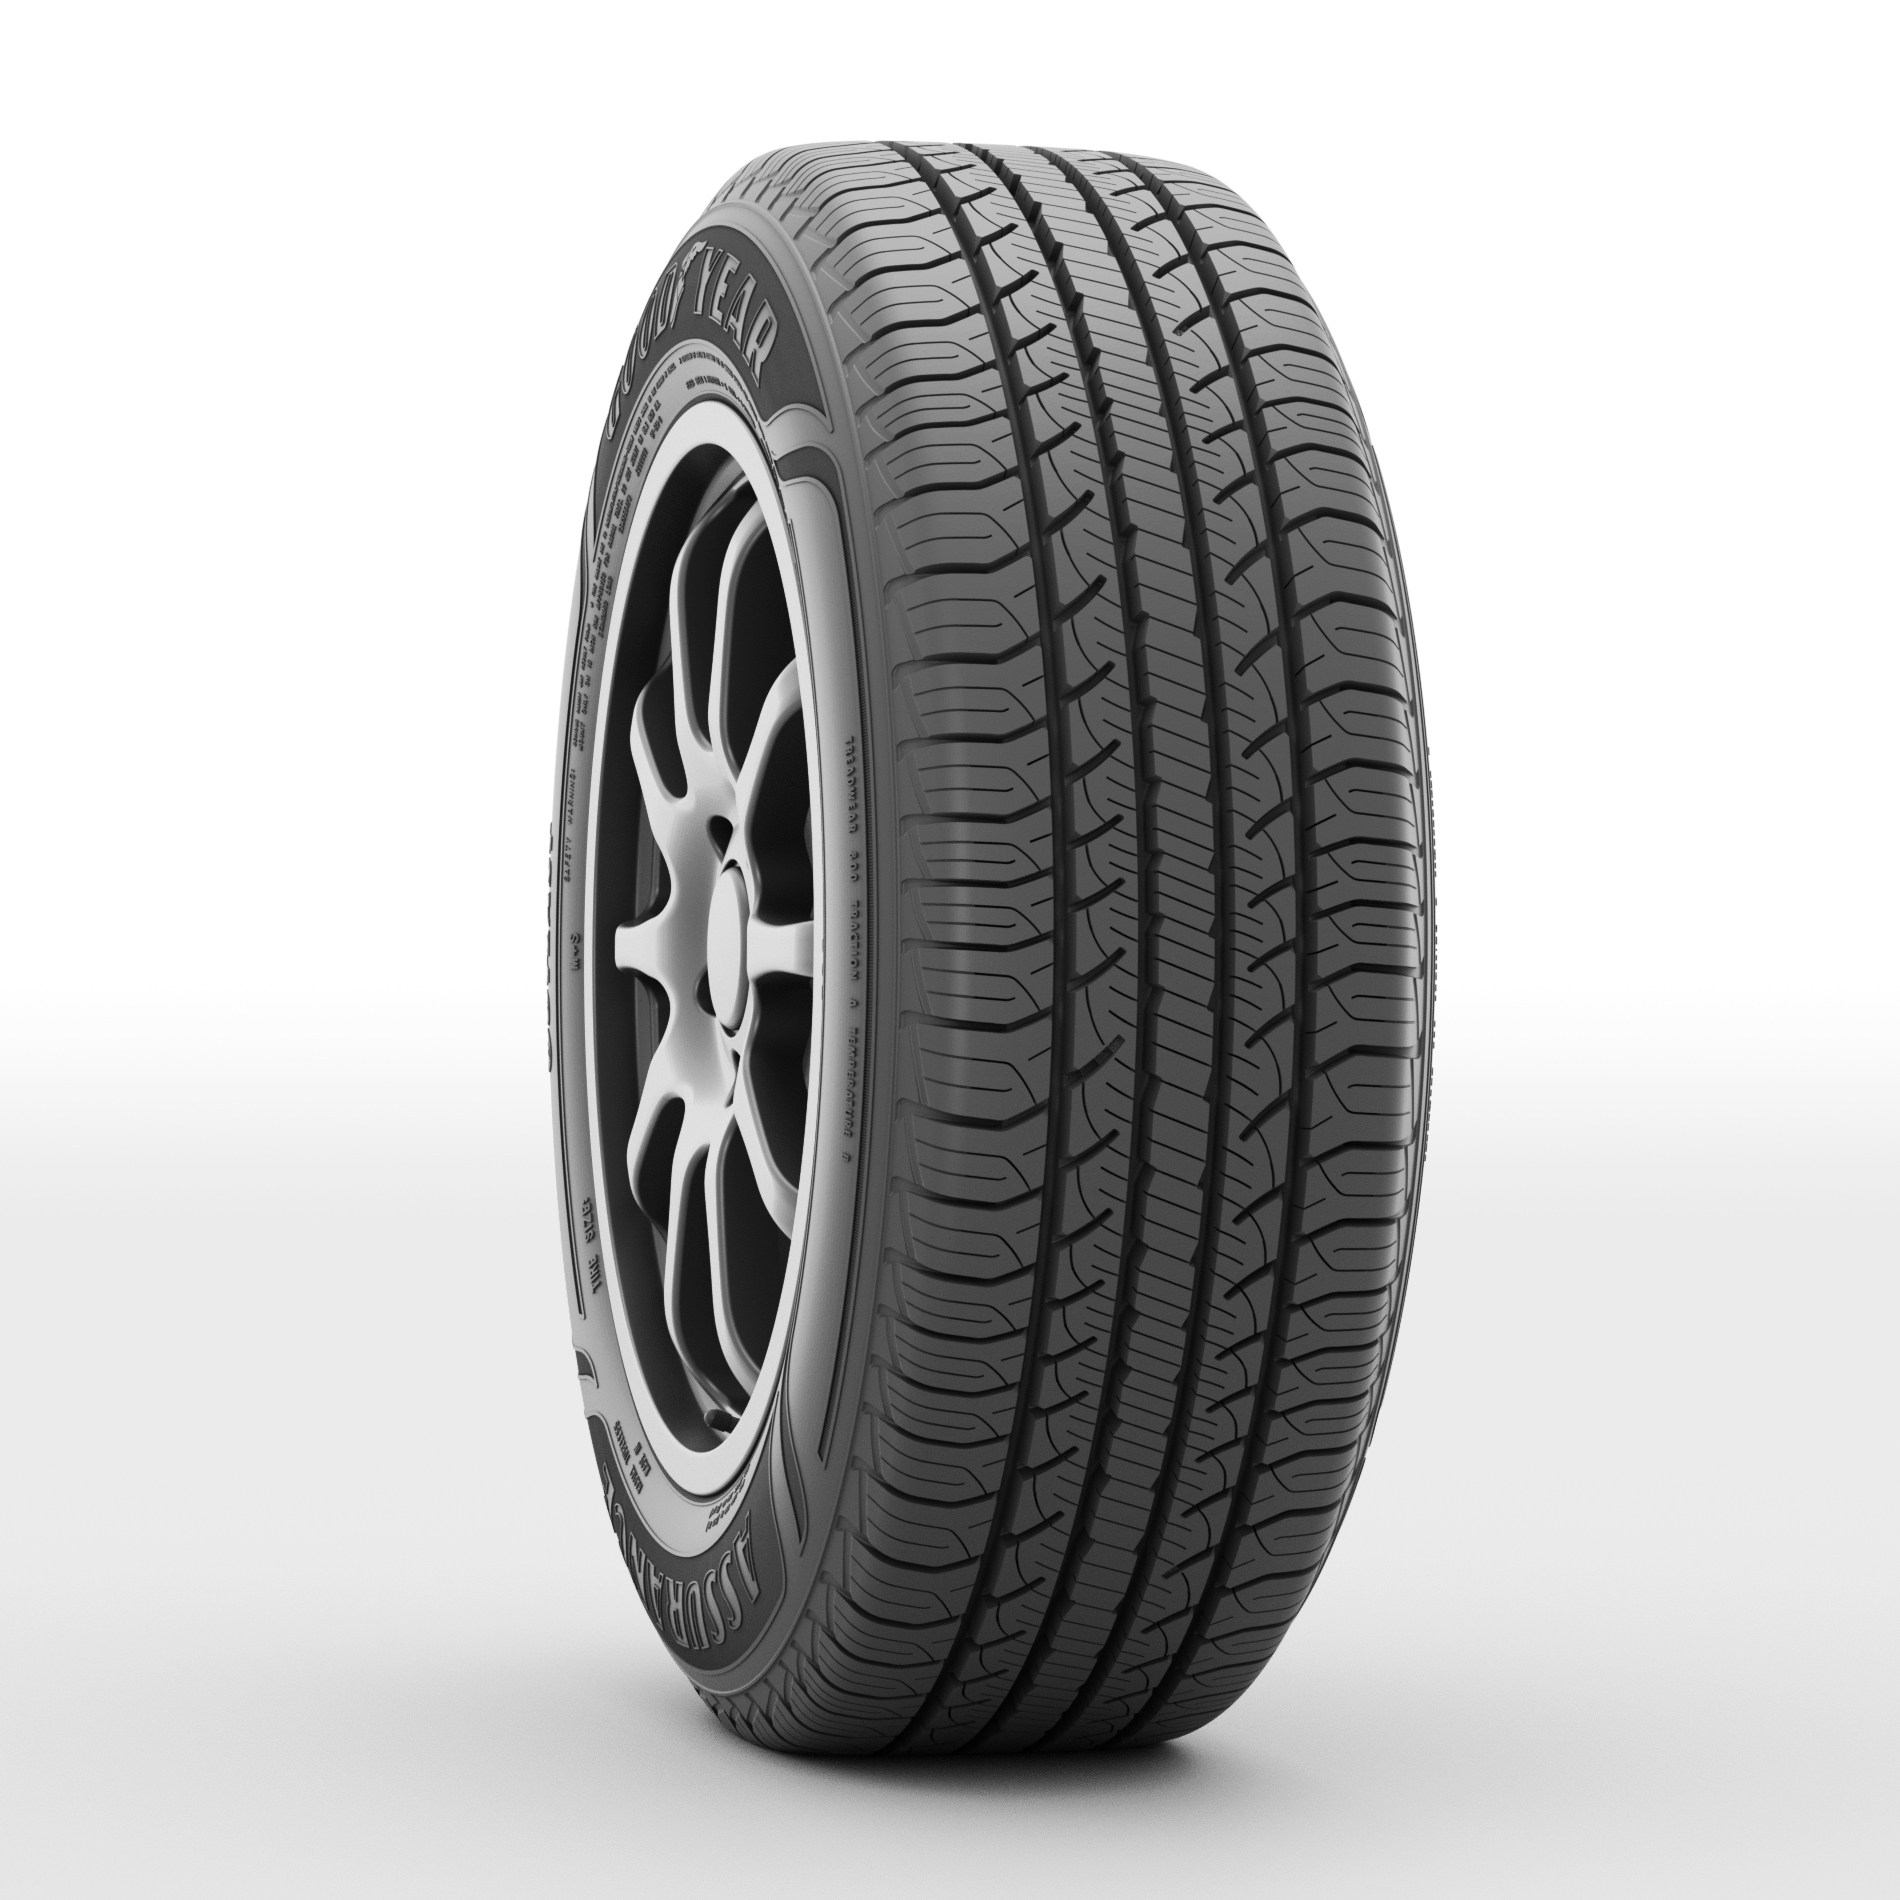 Goodyear Assurance Outlast 235/65R17 104H All-Season Tire | Autoreifen